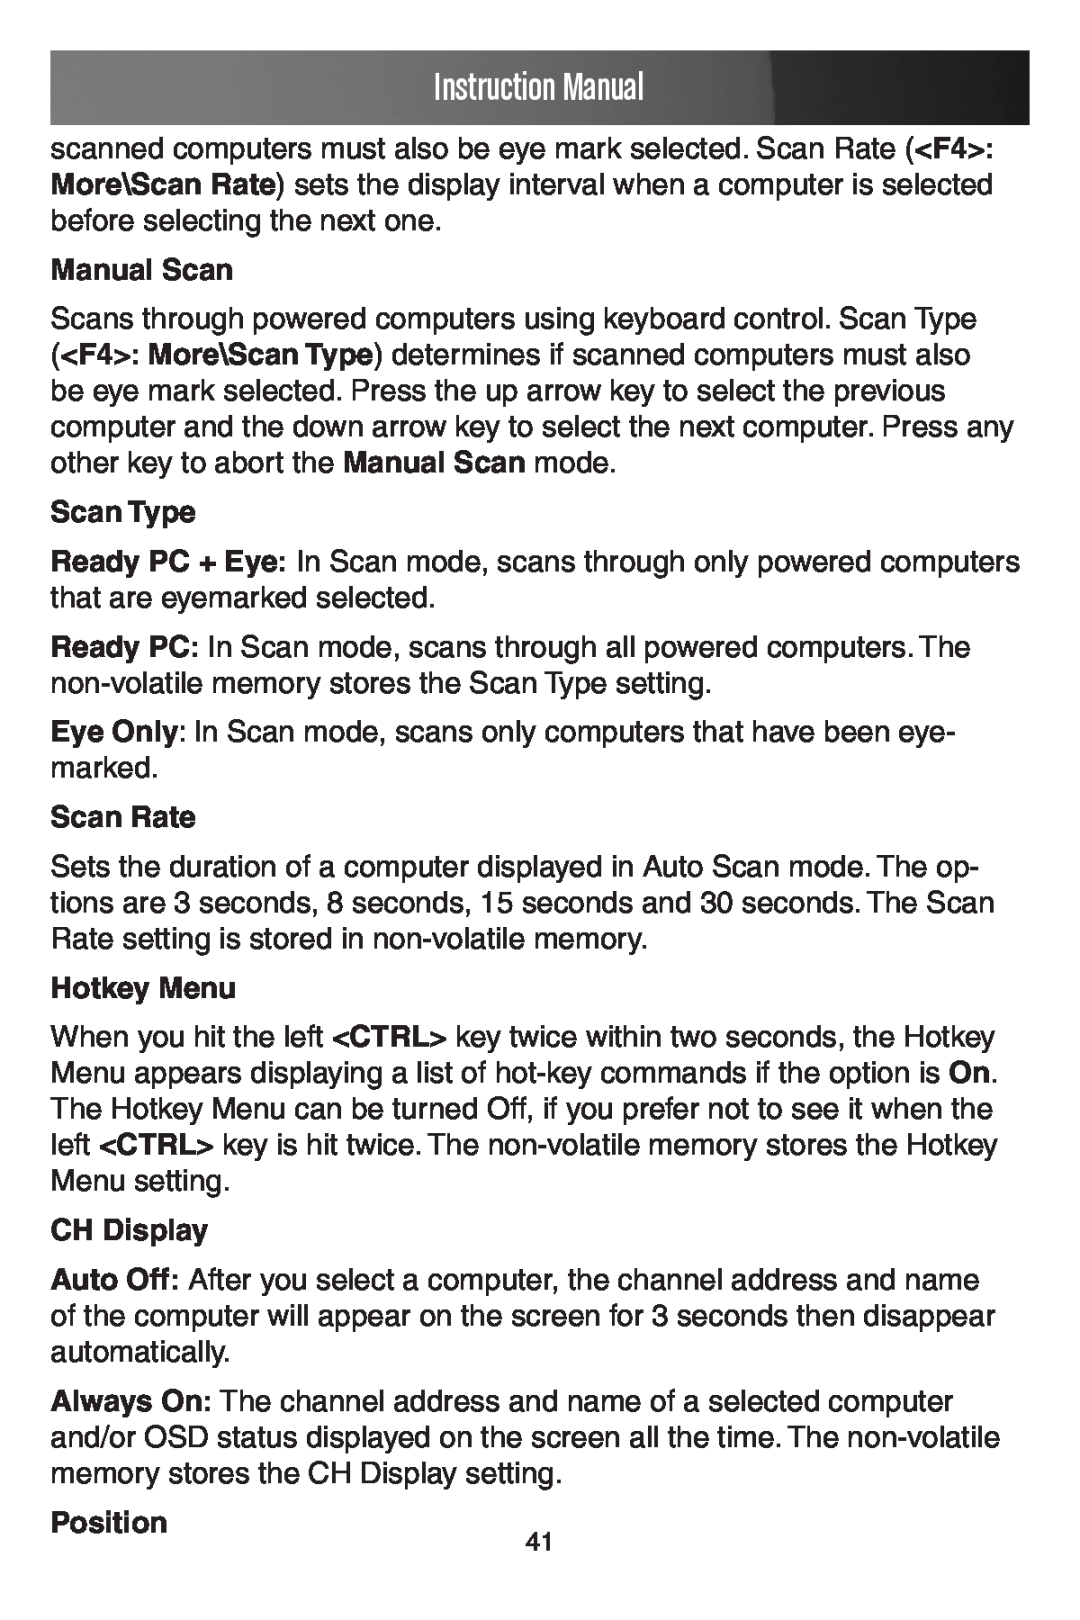 StarTech.com SV441DUSBI Manual Scan, Scan Type, Scan Rate, Hotkey Menu, CH Display, Position, Instruction Manual 